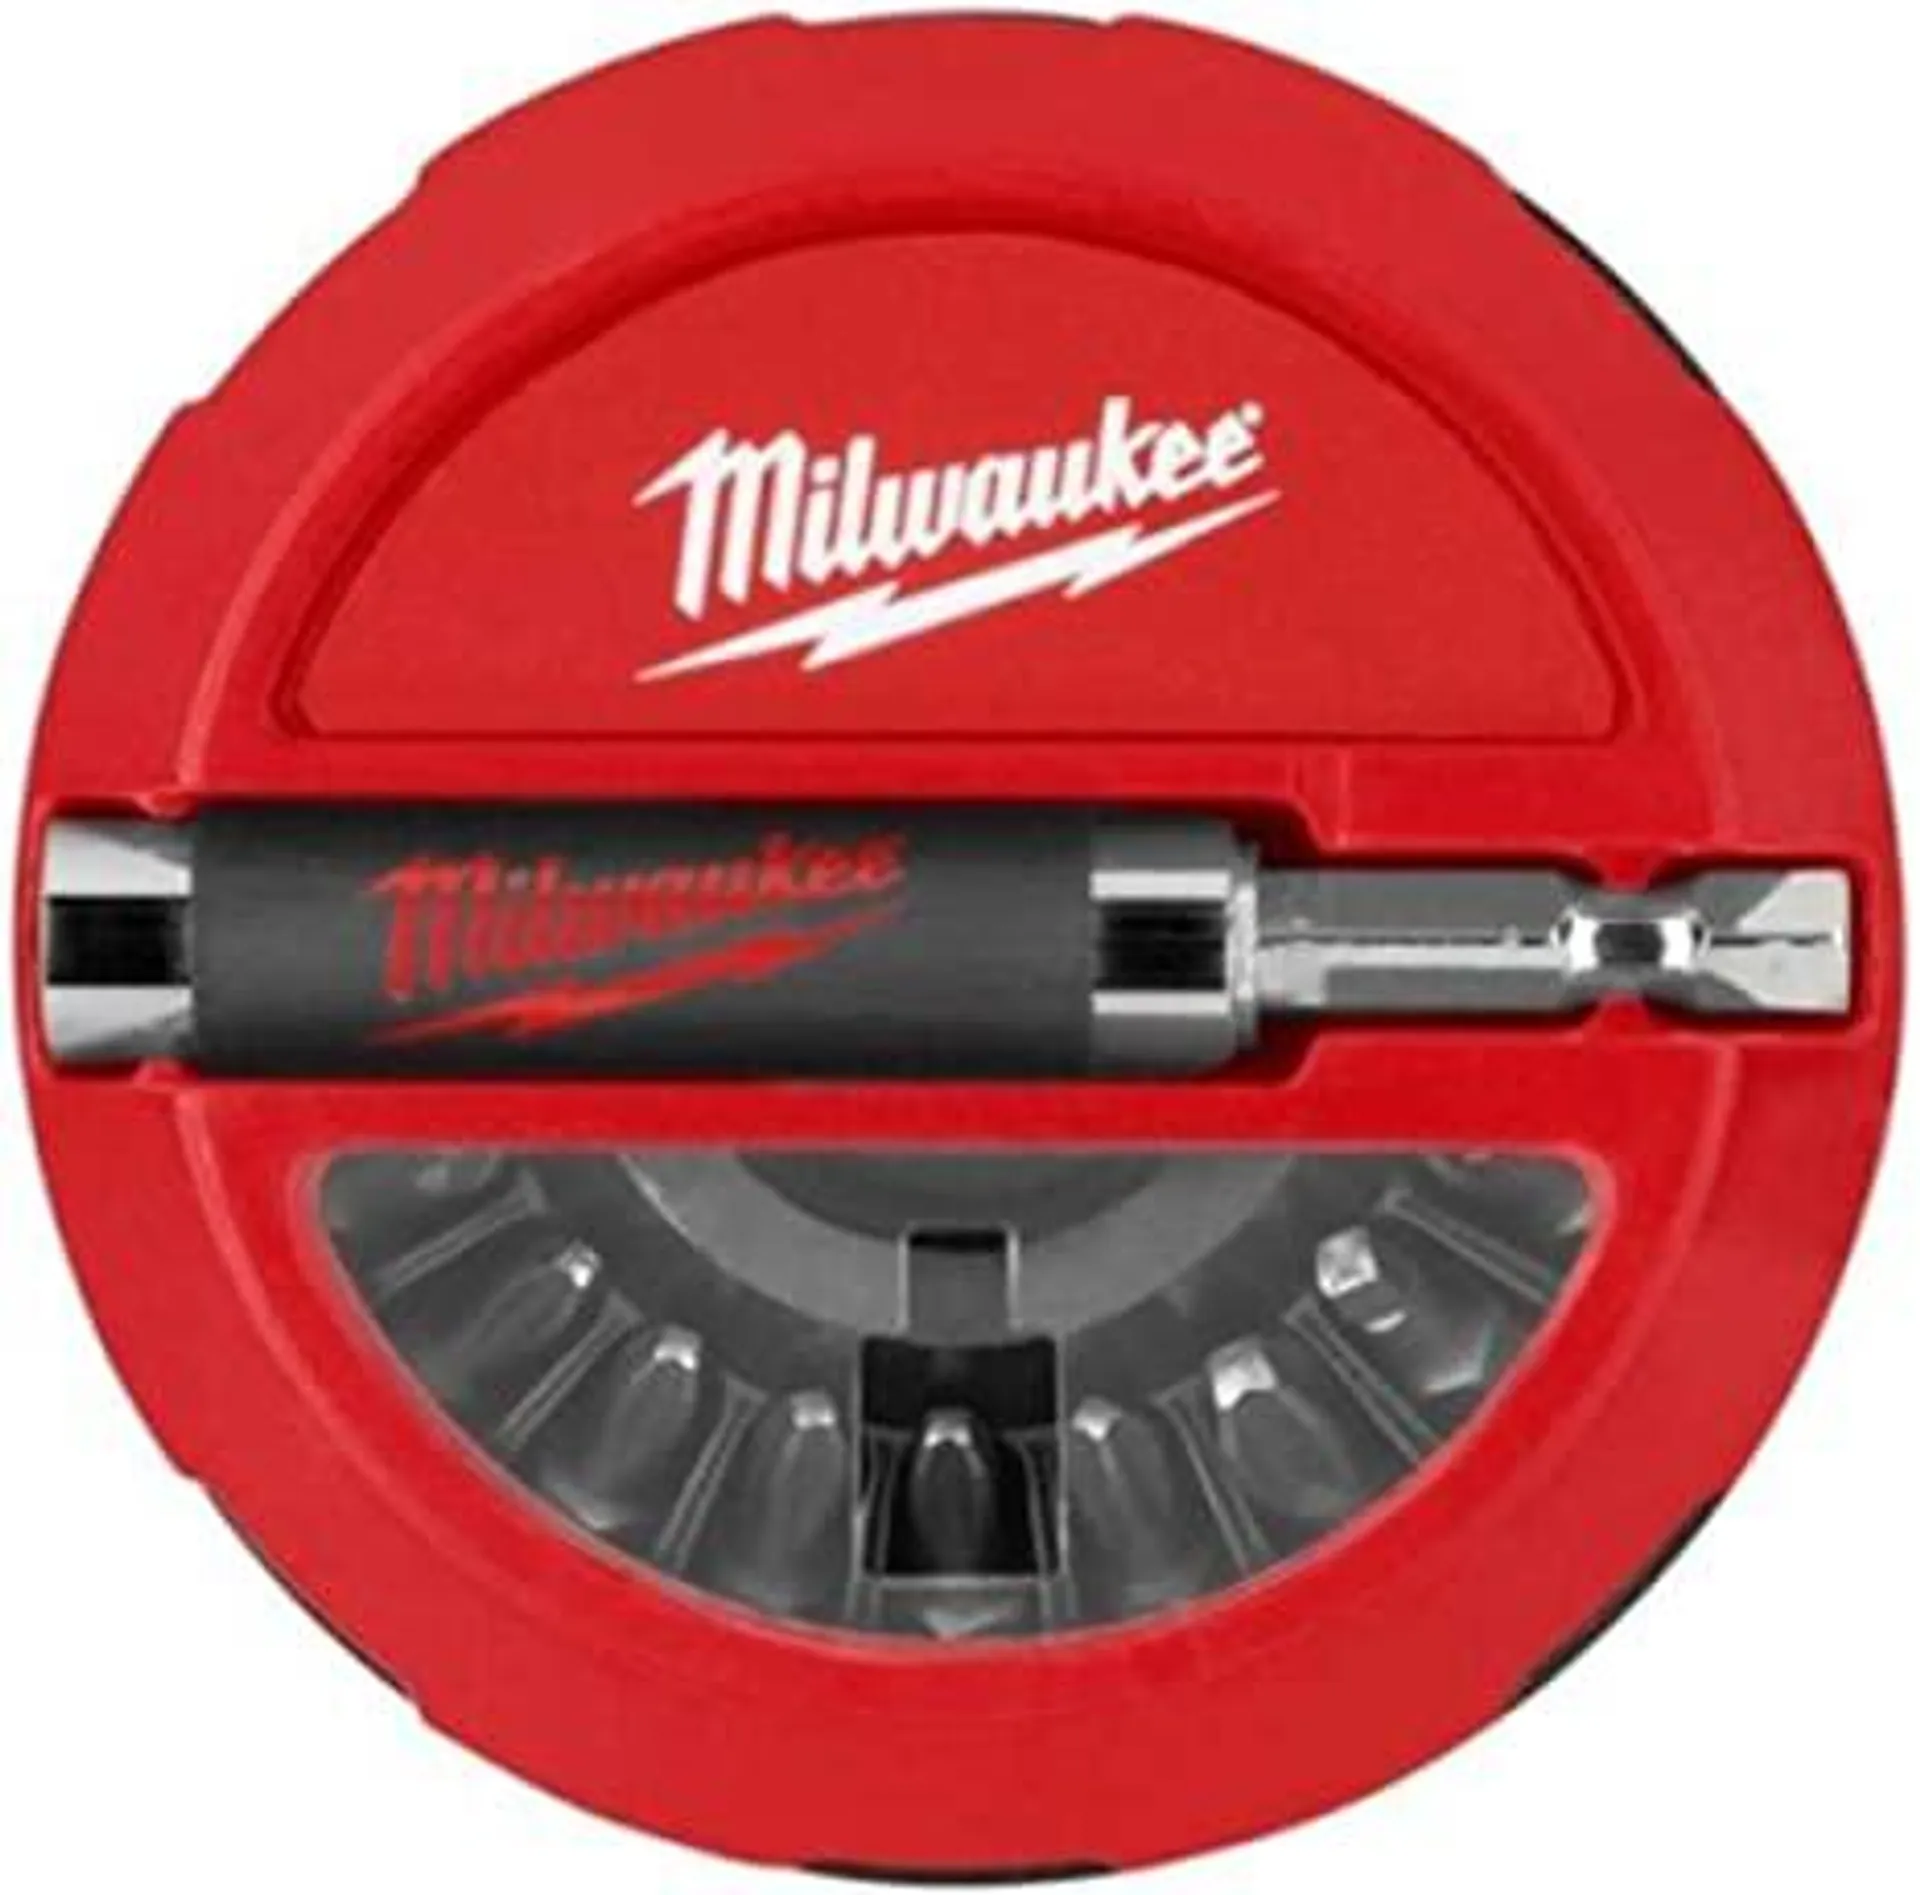 Milwaukee 48-32-1700 Insert Bit Screw Driving Set, 20-Piece